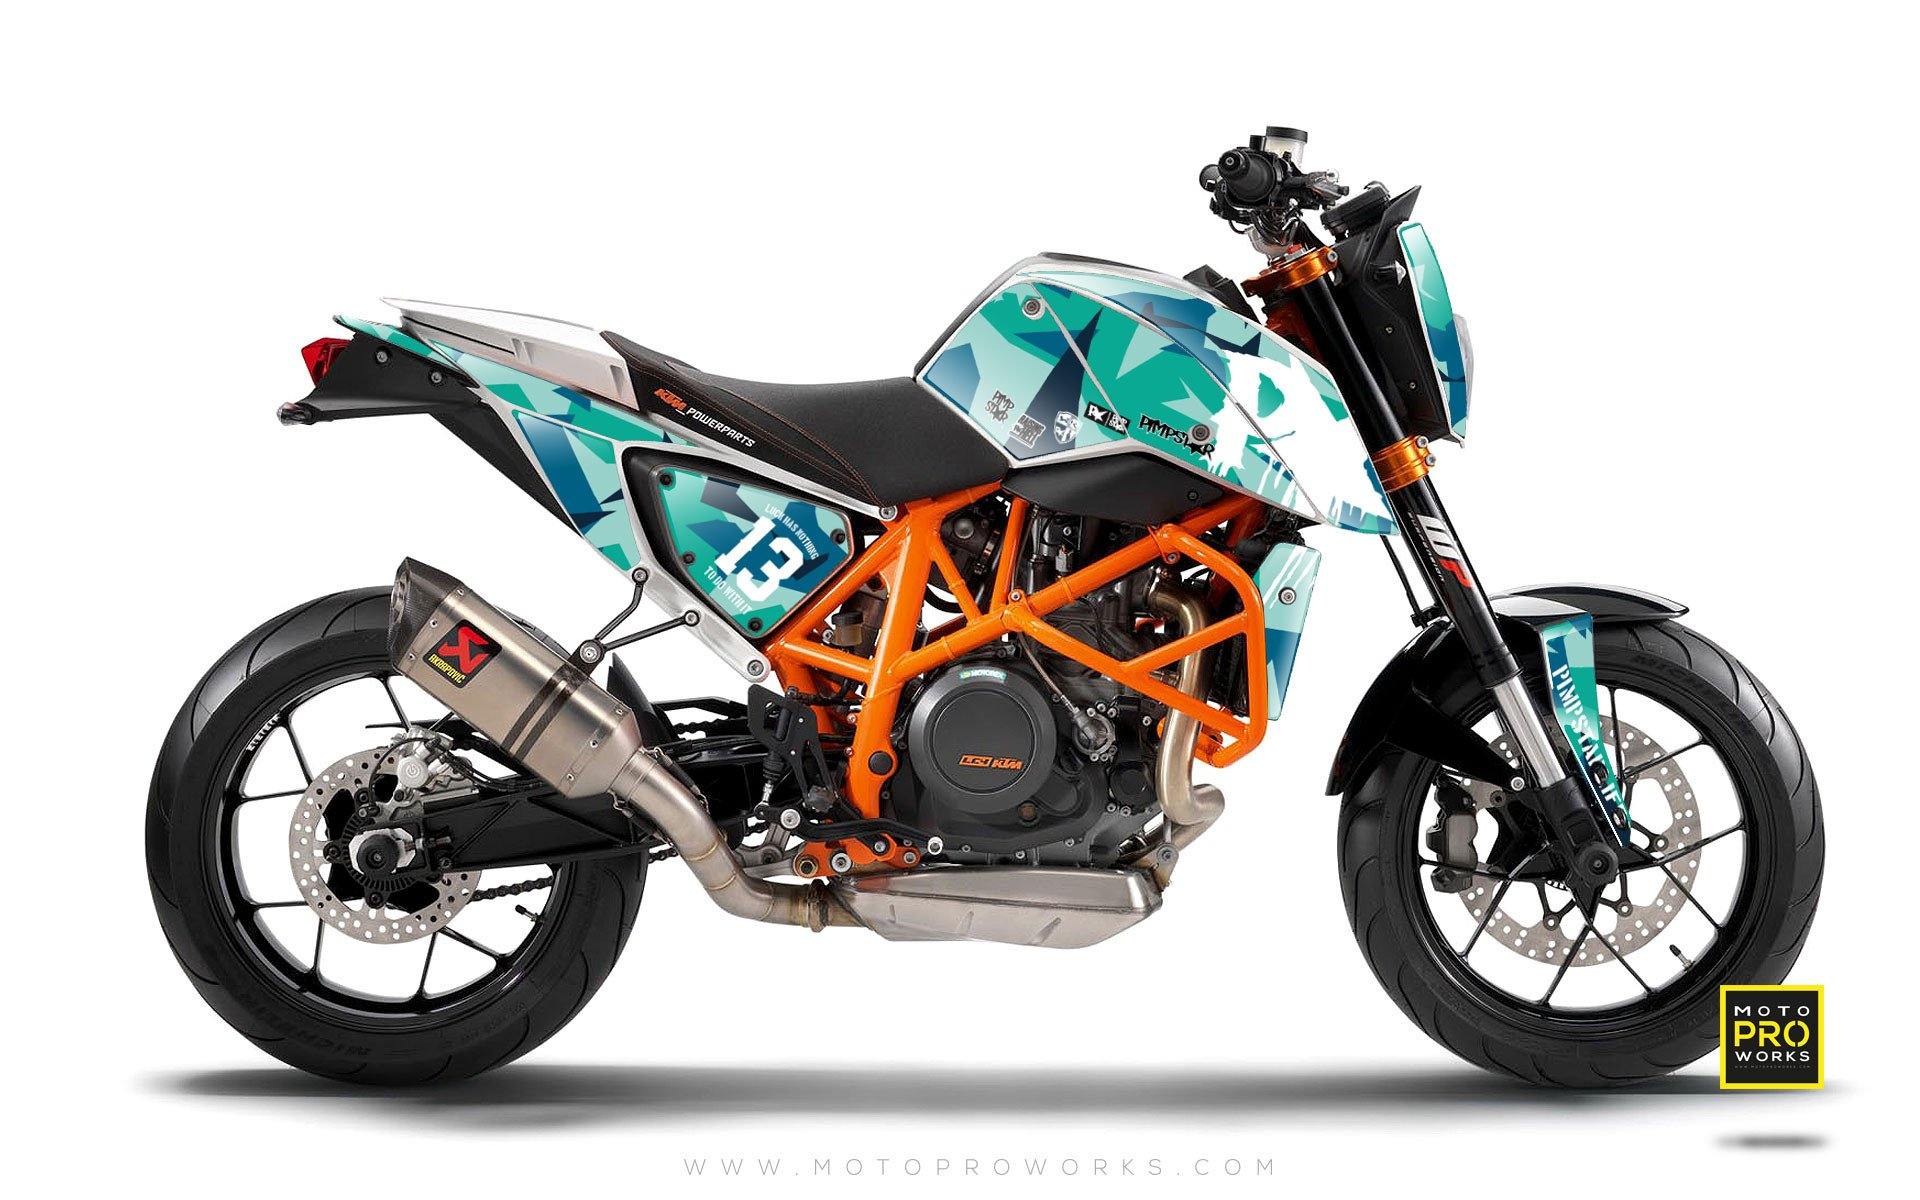 KTM GRAPHIC KIT - "M90" (banger) - MotoProWorks | Decals and Bike Graphic kit